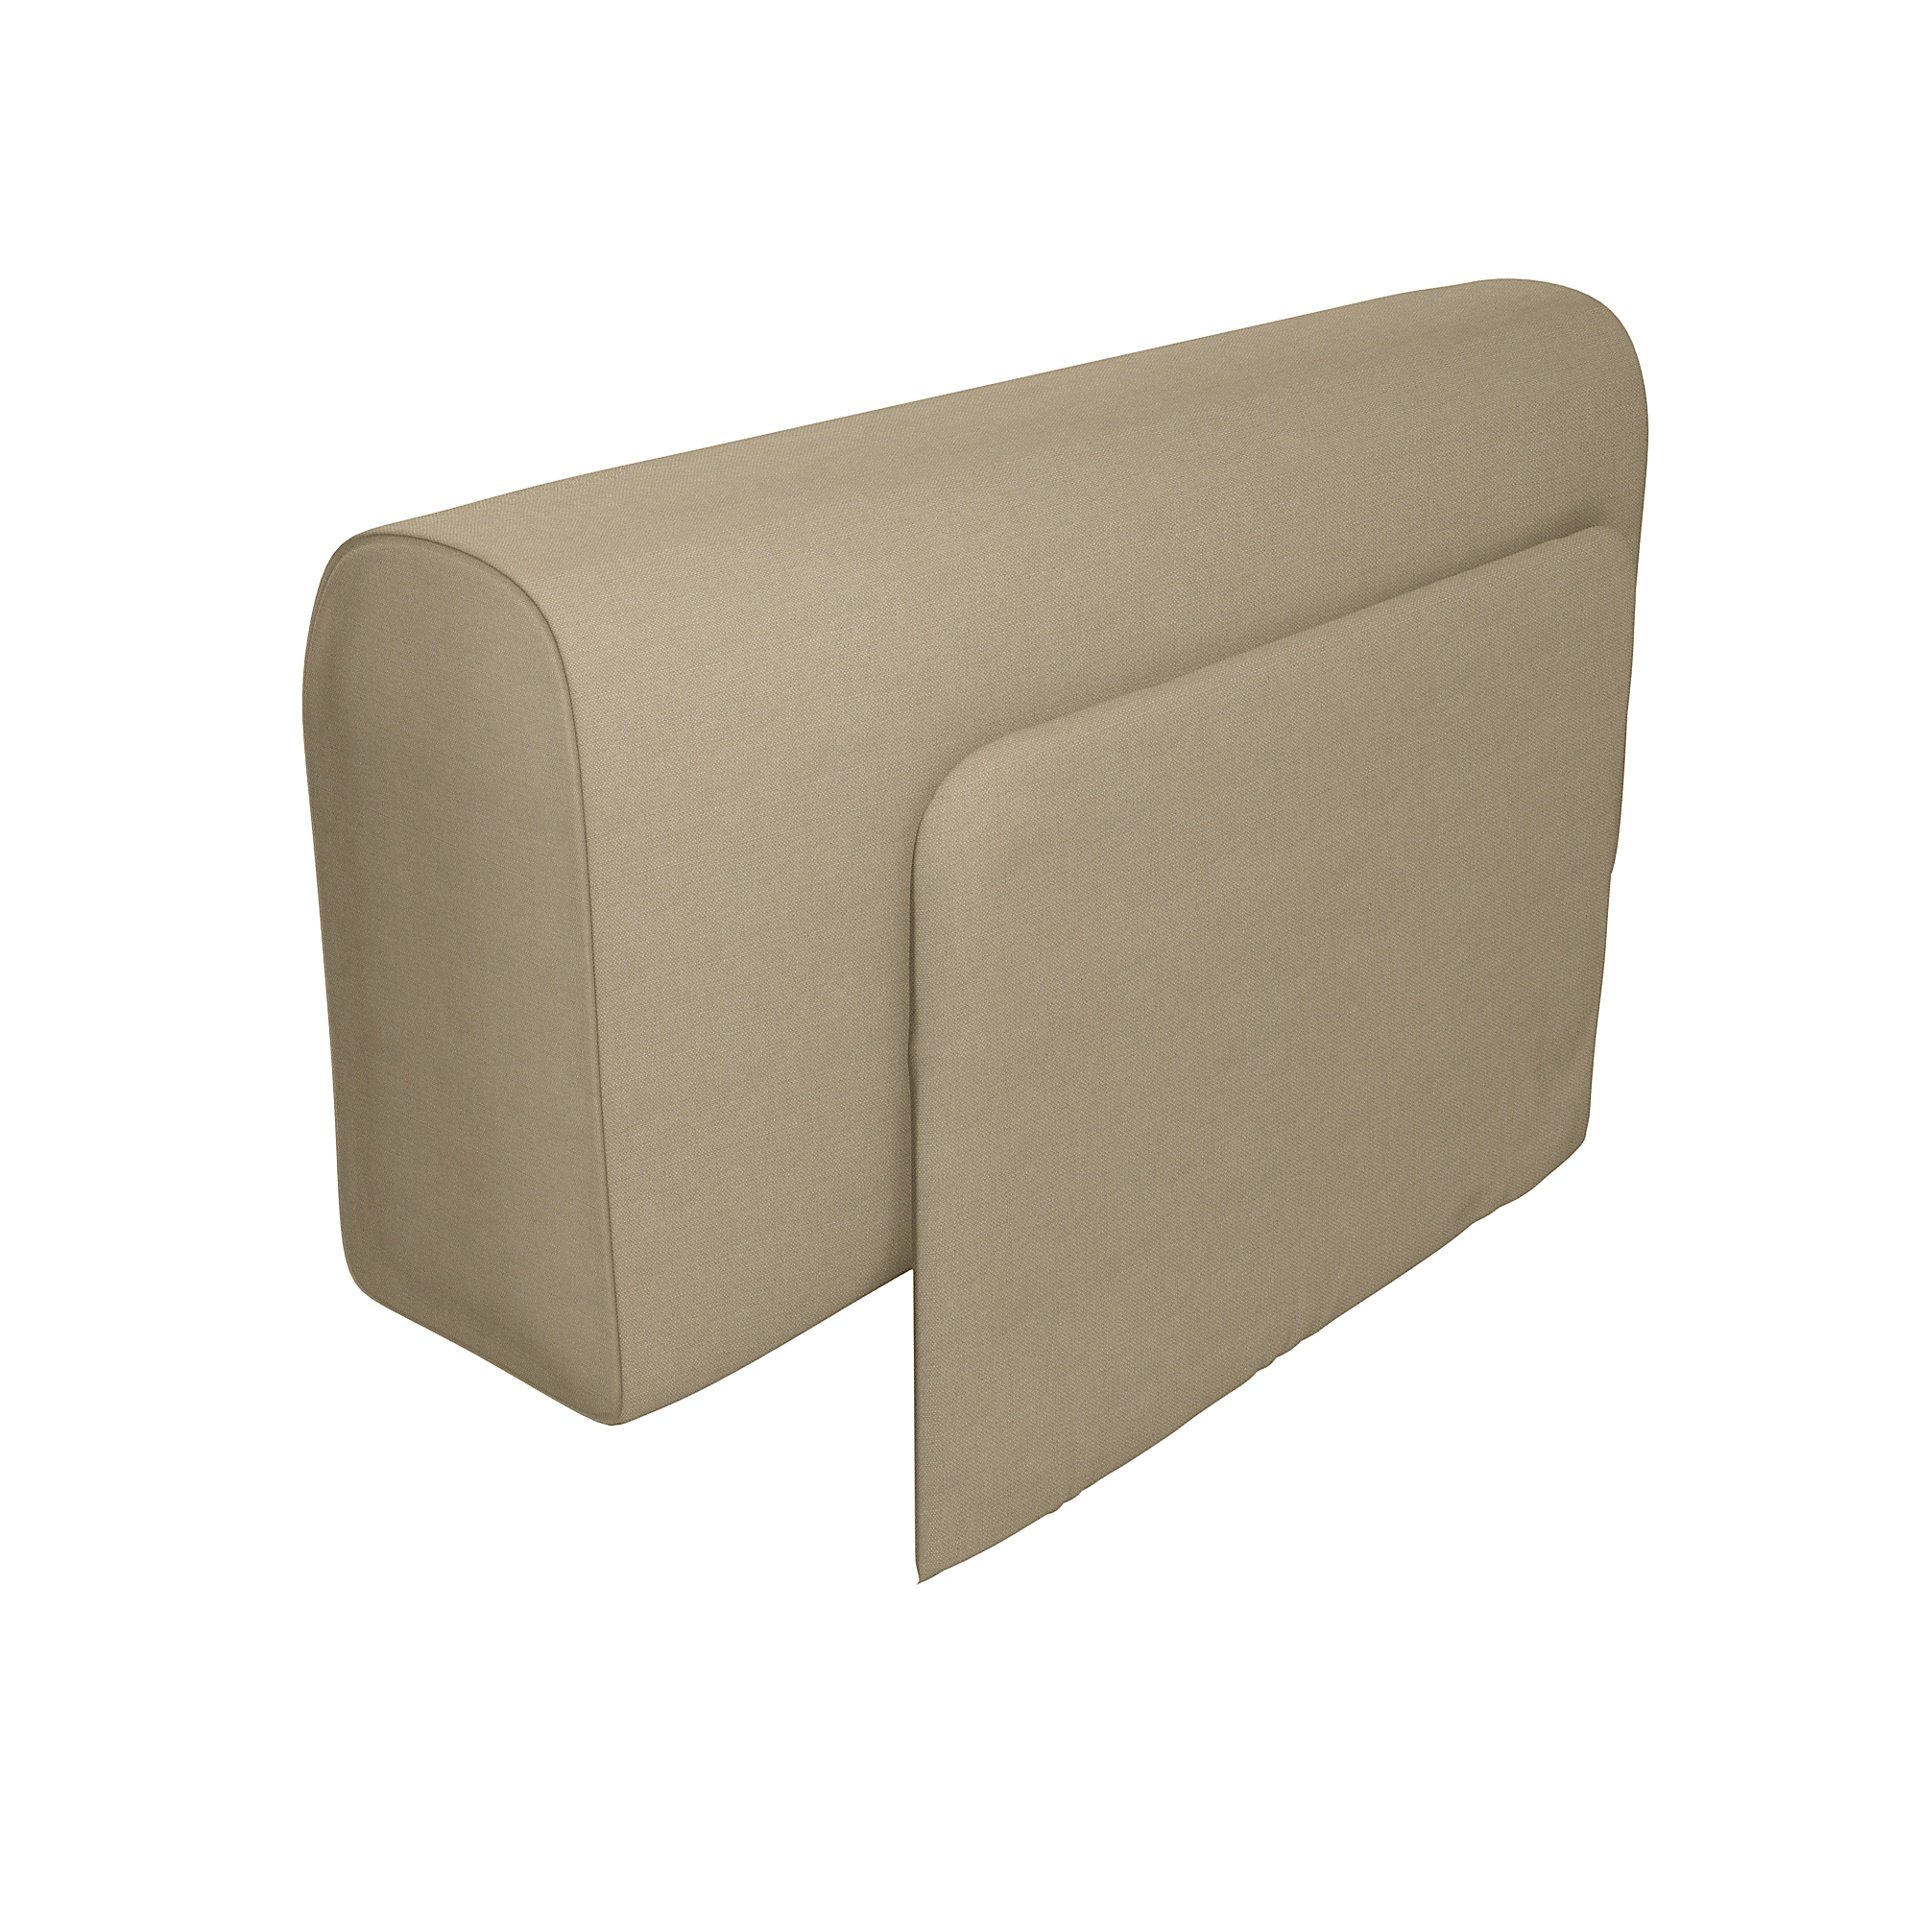 IKEA - Delaktig Armrest with Cushion Cover, Tan, Linen - Bemz